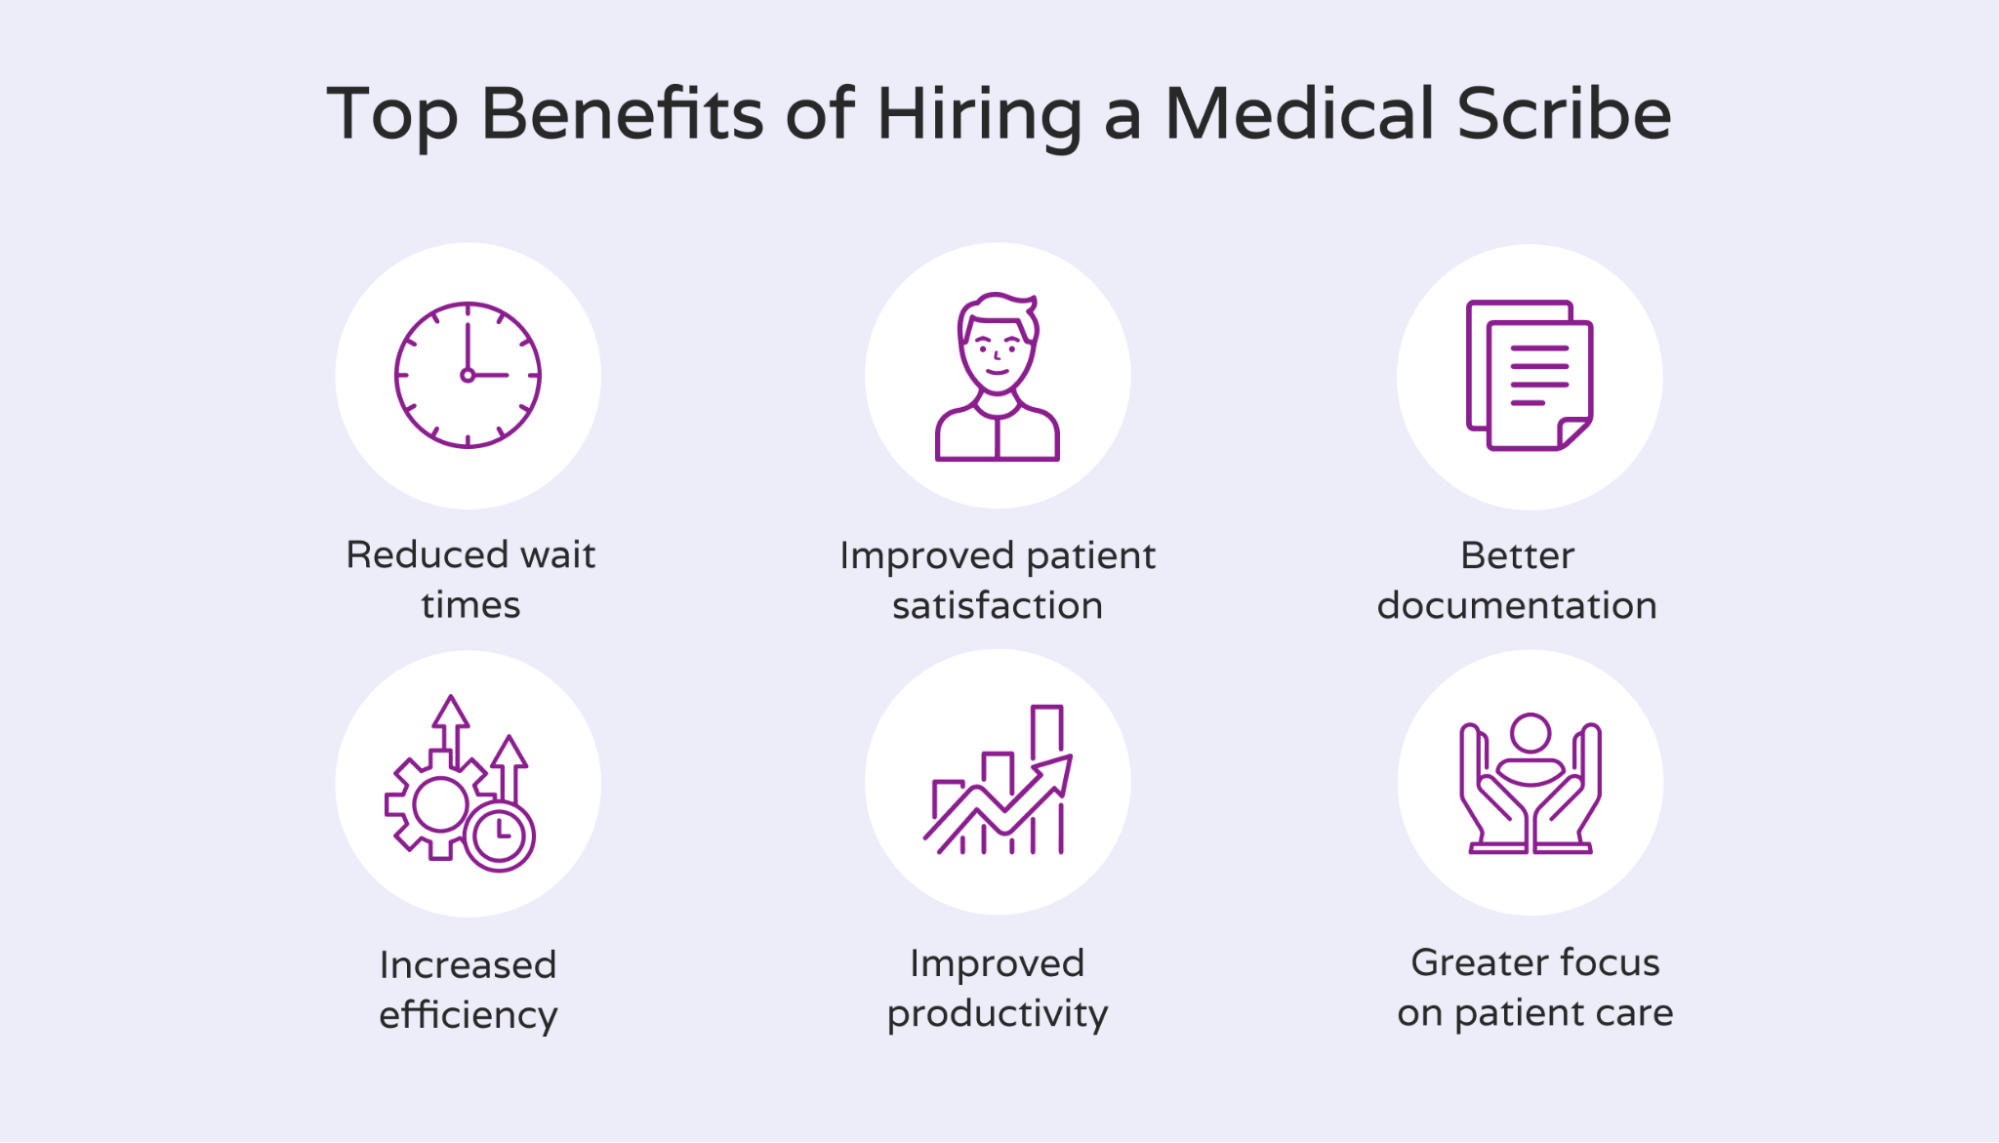 Top benefits of hiring a medical scribe